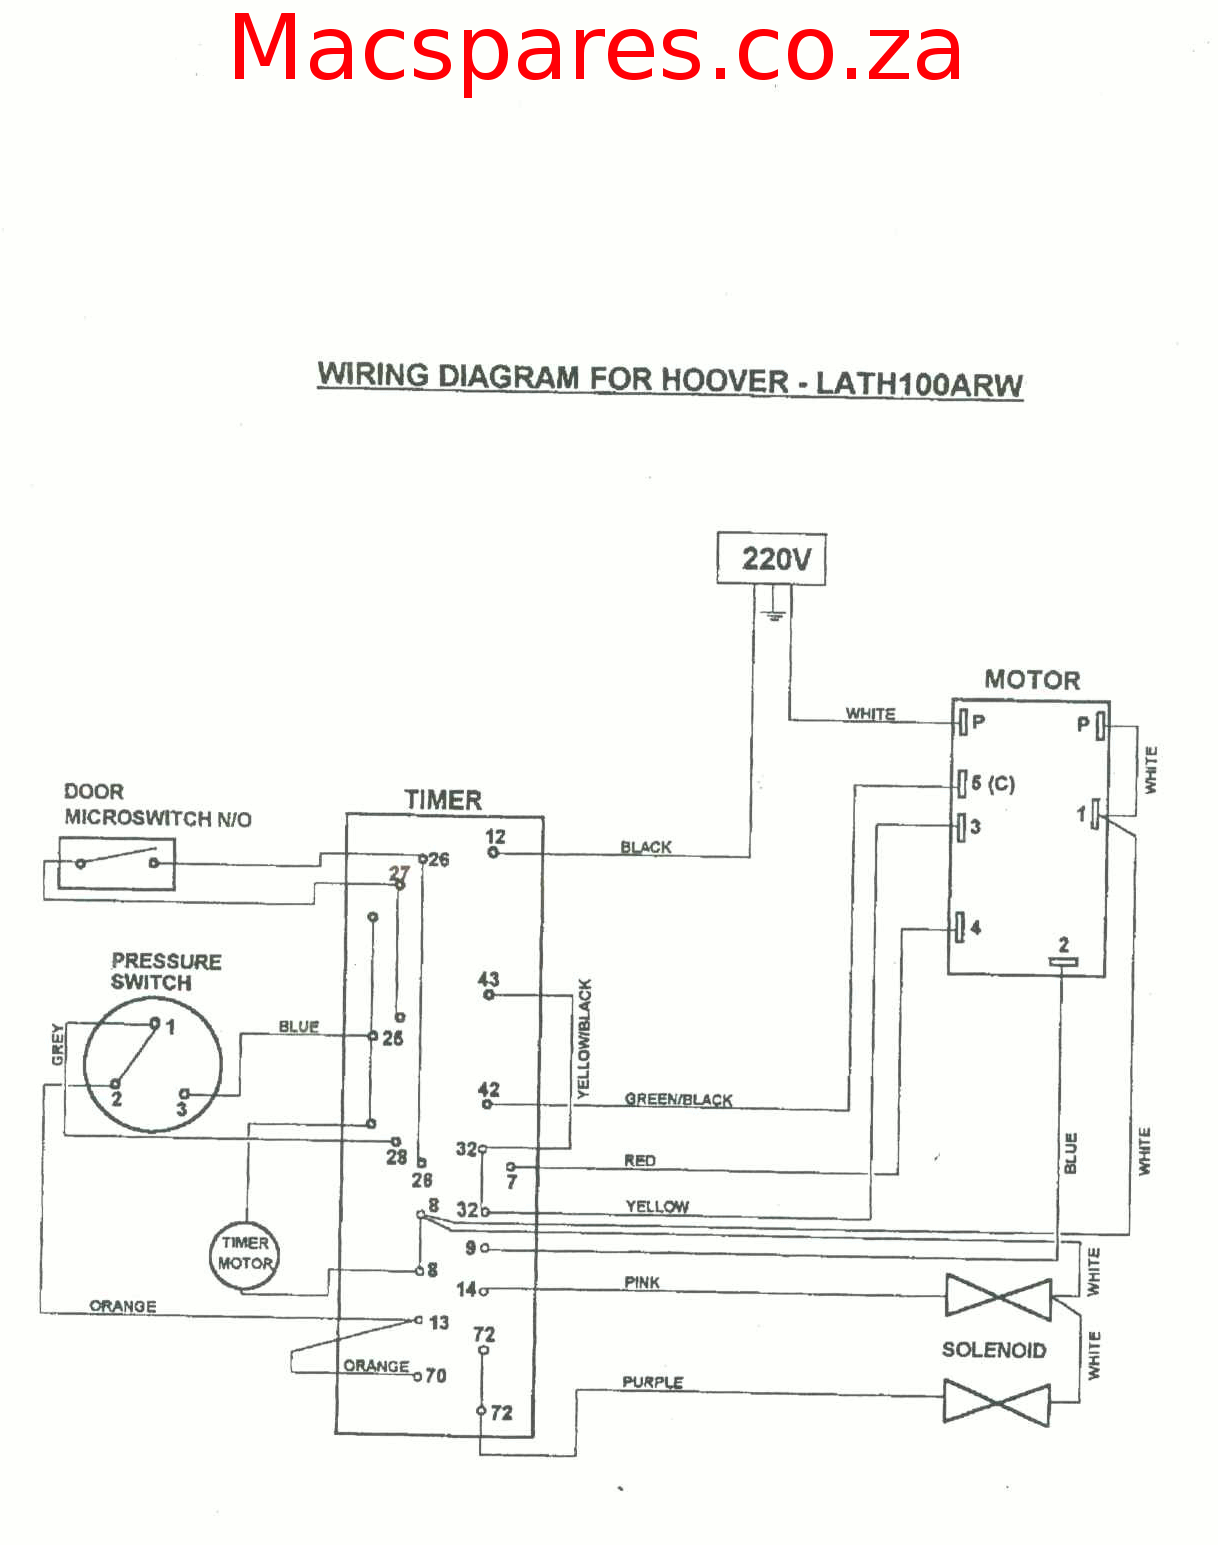 Wiring Diagrams   Washing Machines   Macspares